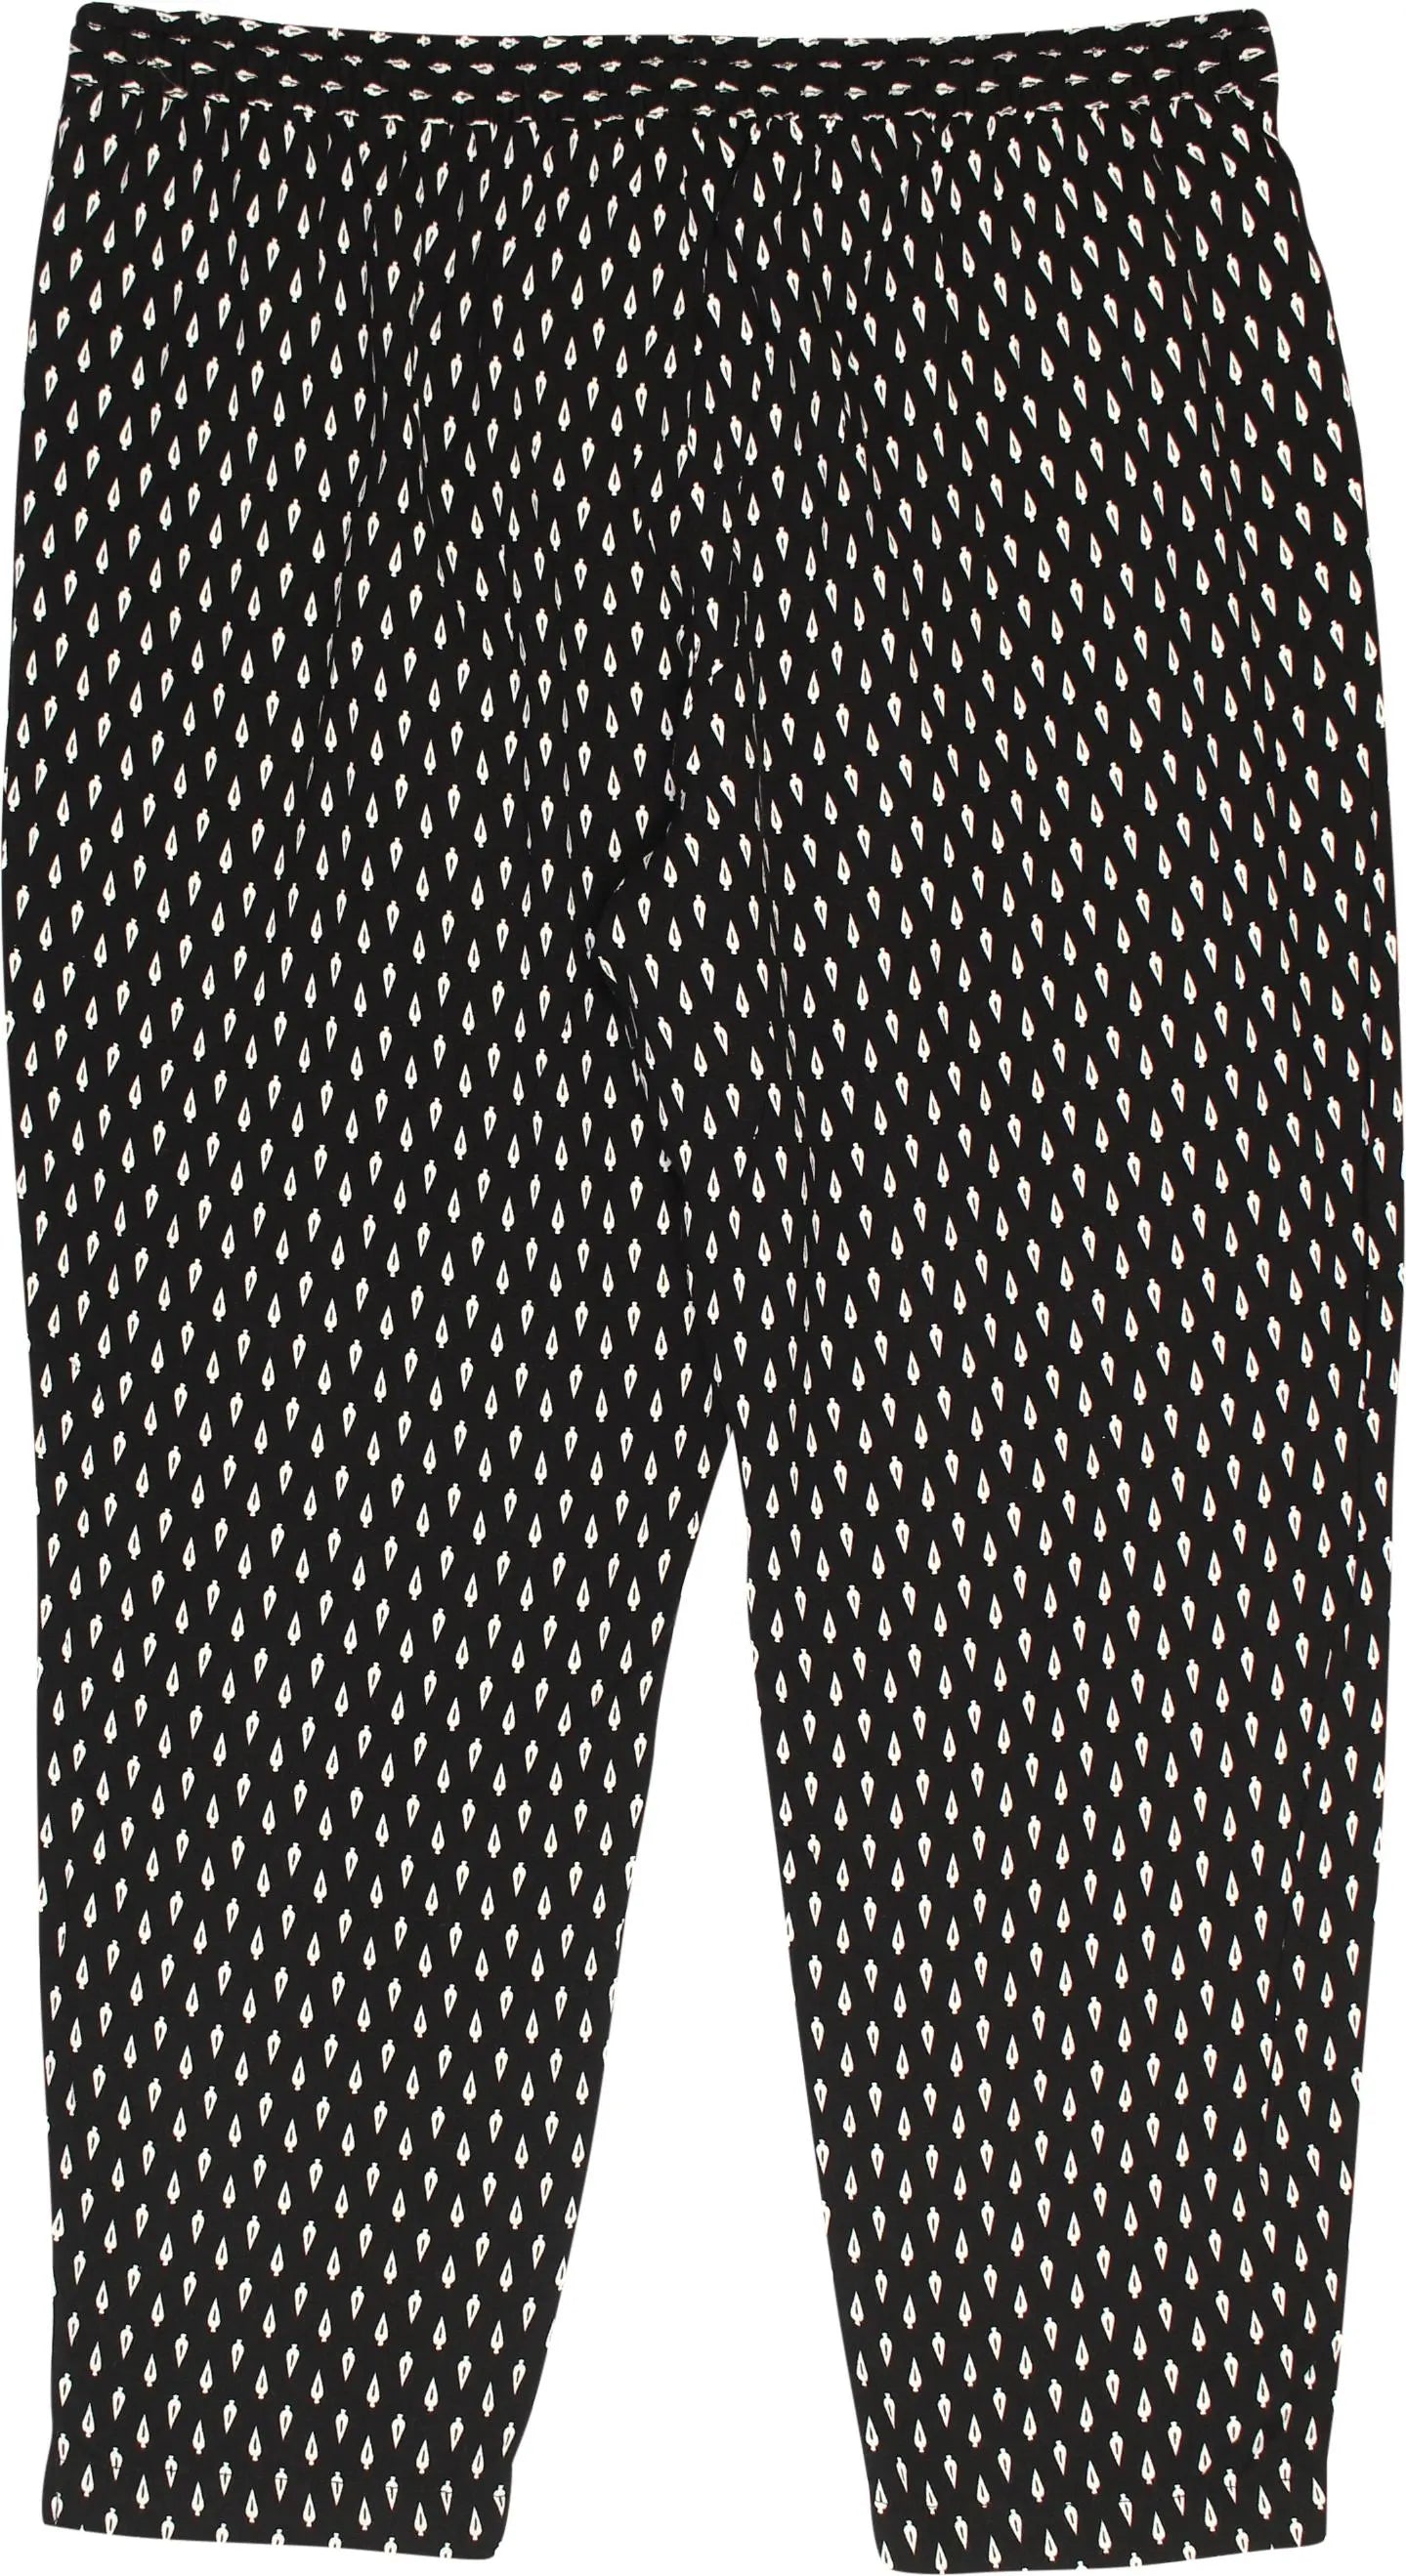 Chaps Ralph Lauren - Beach Pants- ThriftTale.com - Vintage and second handclothing